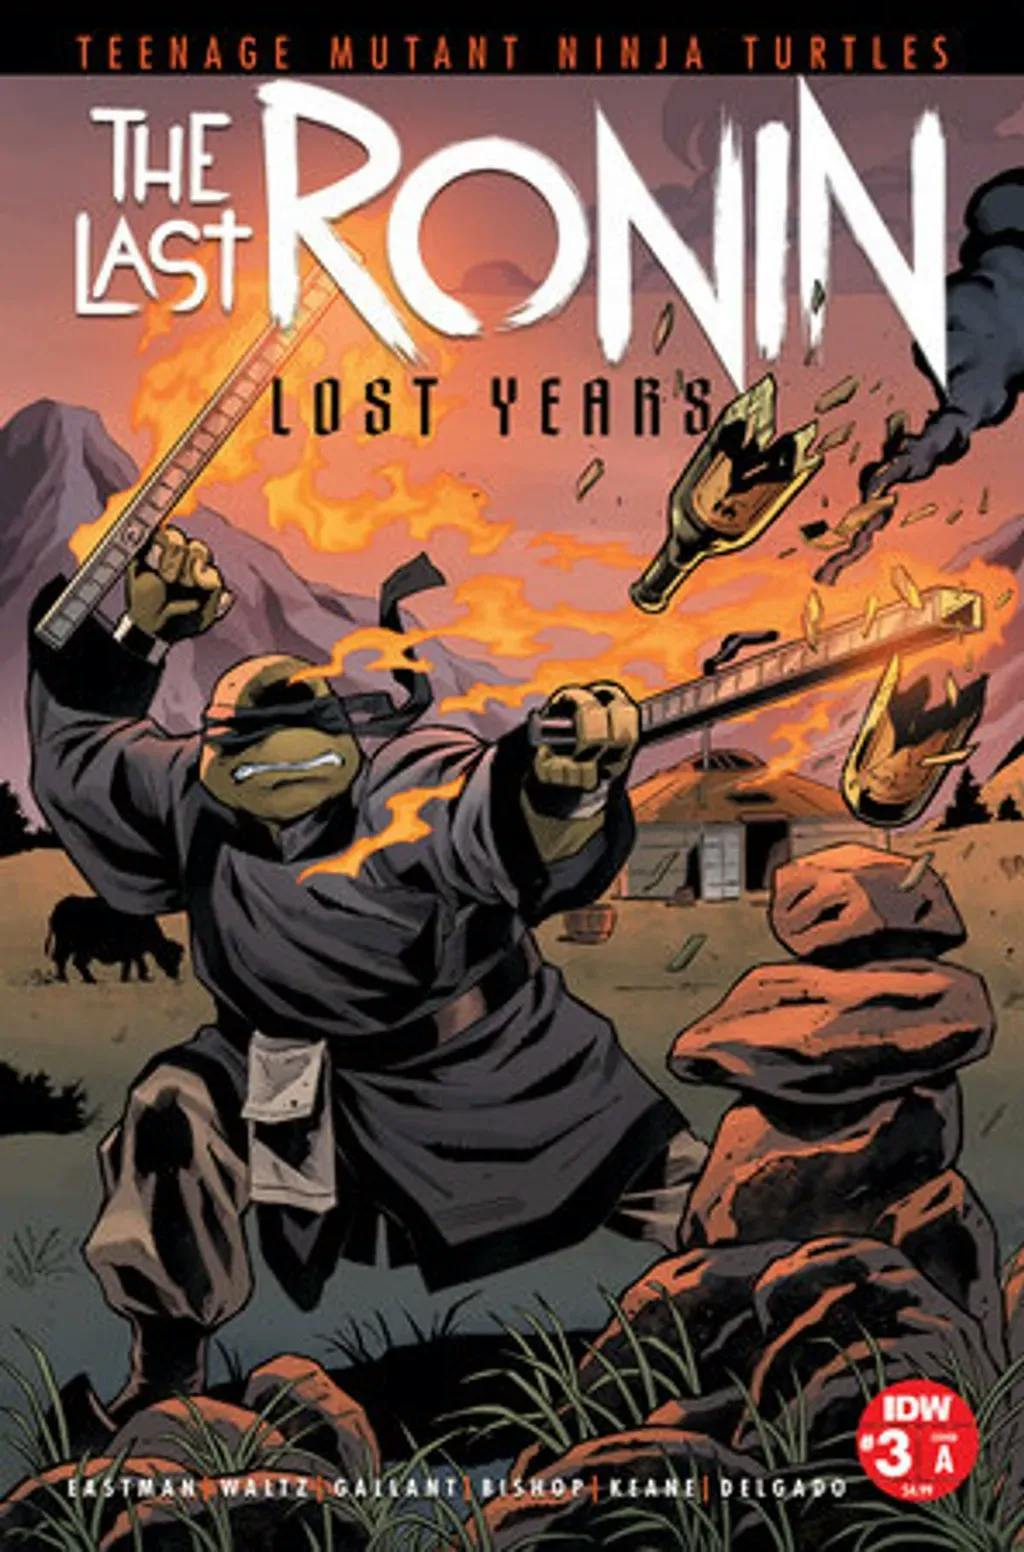 Teenage Mutant Ninja Turtles: The Last Ronin - The Lost Years #3 By Kevin Eastman, Tom Waltz, SL Galant, and Ben Bishop